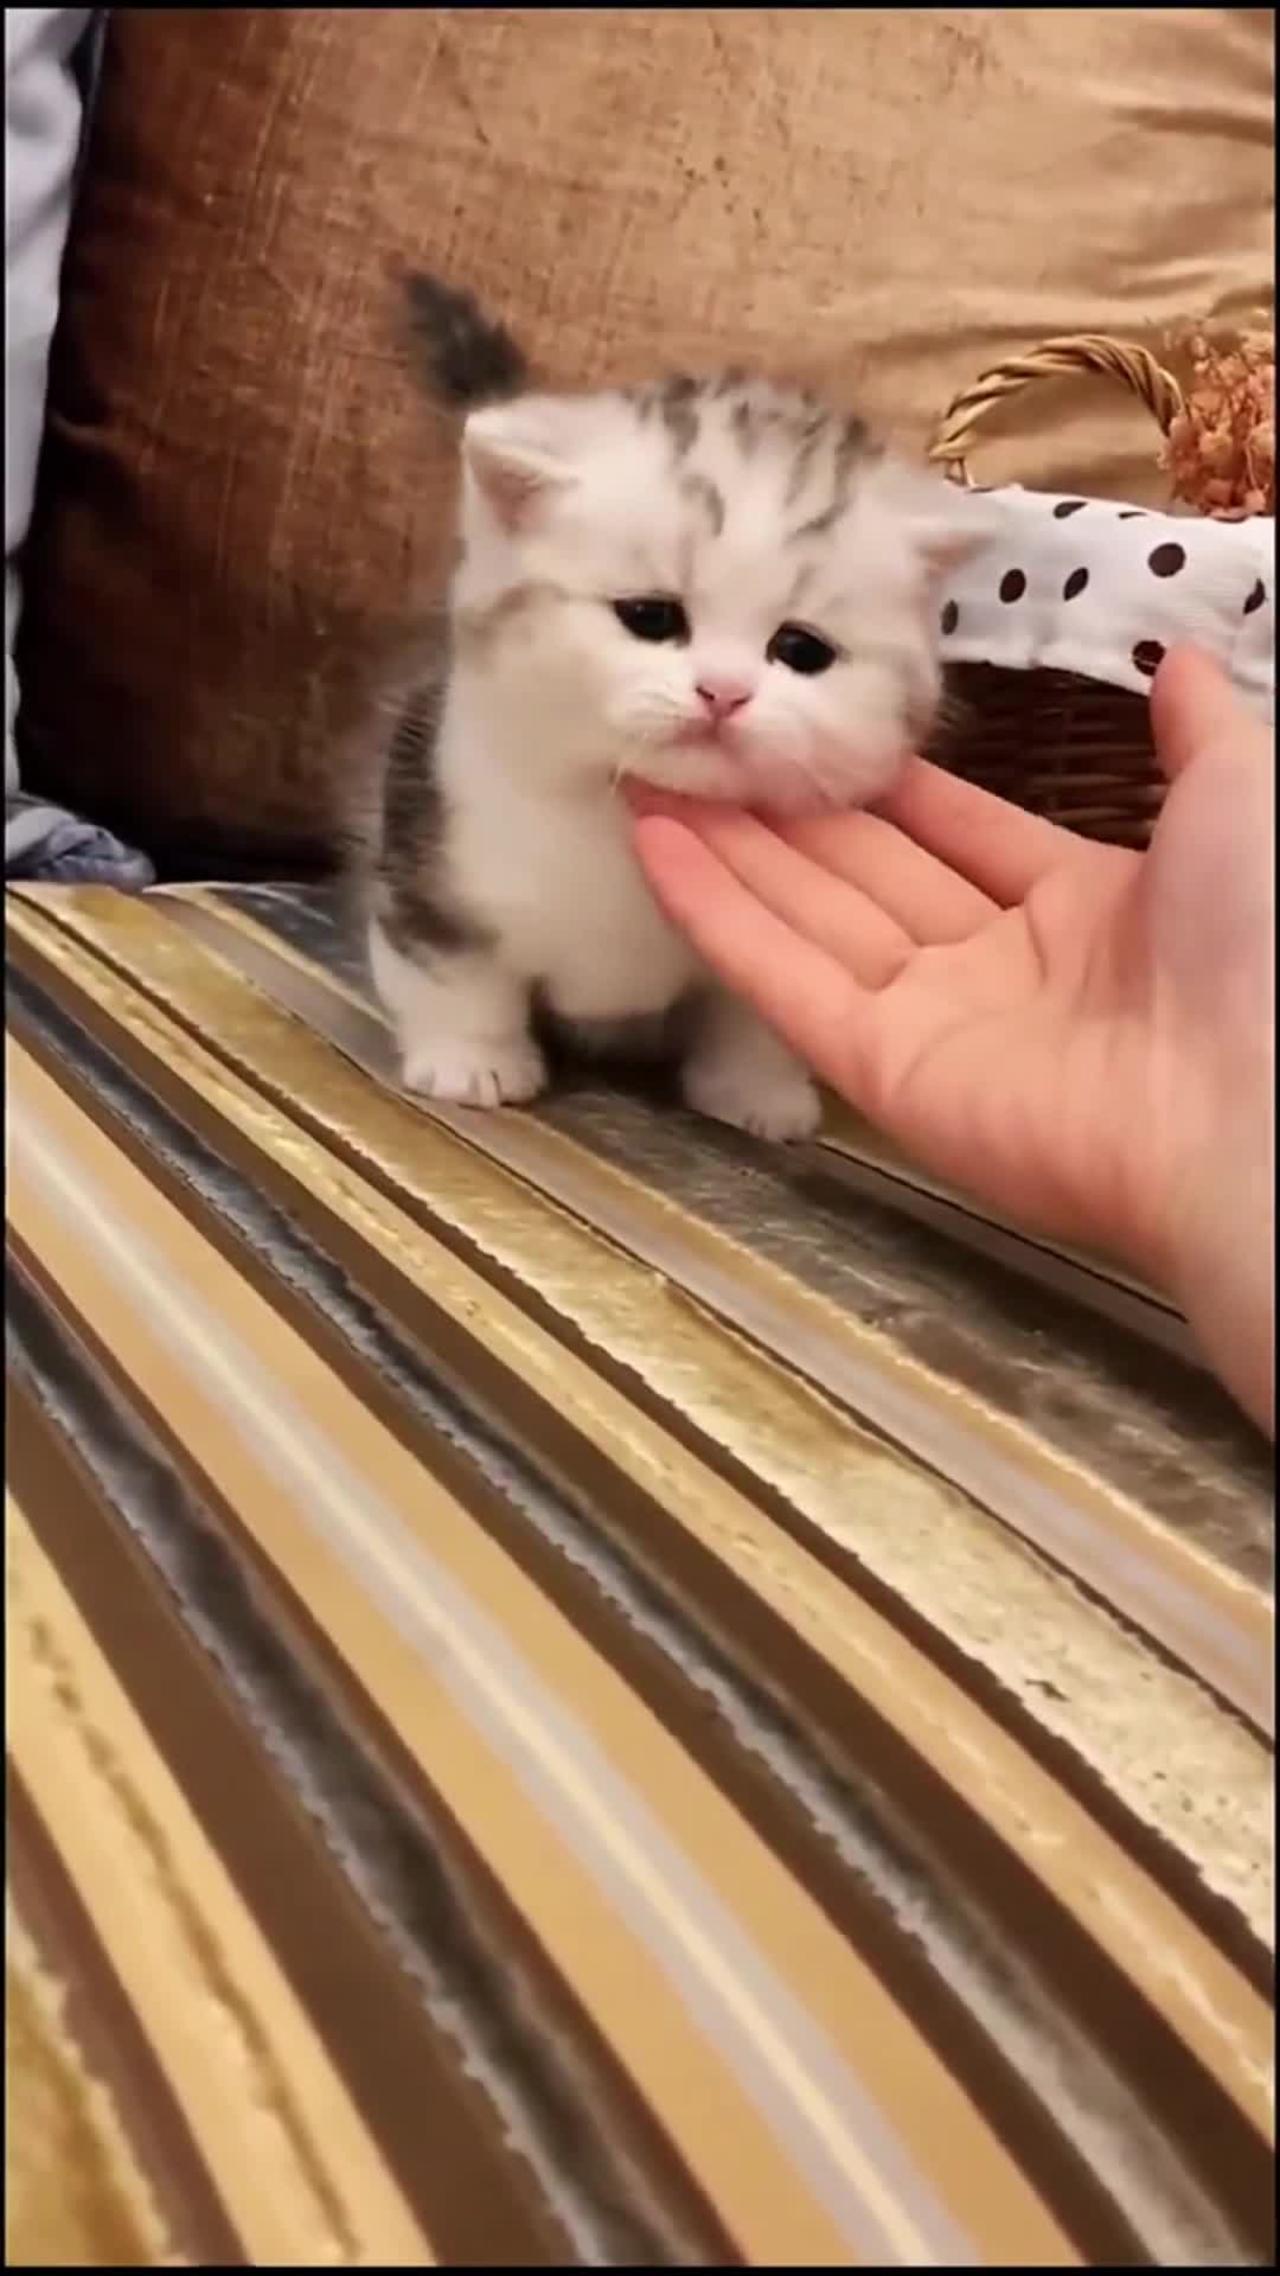 A lovely kitten